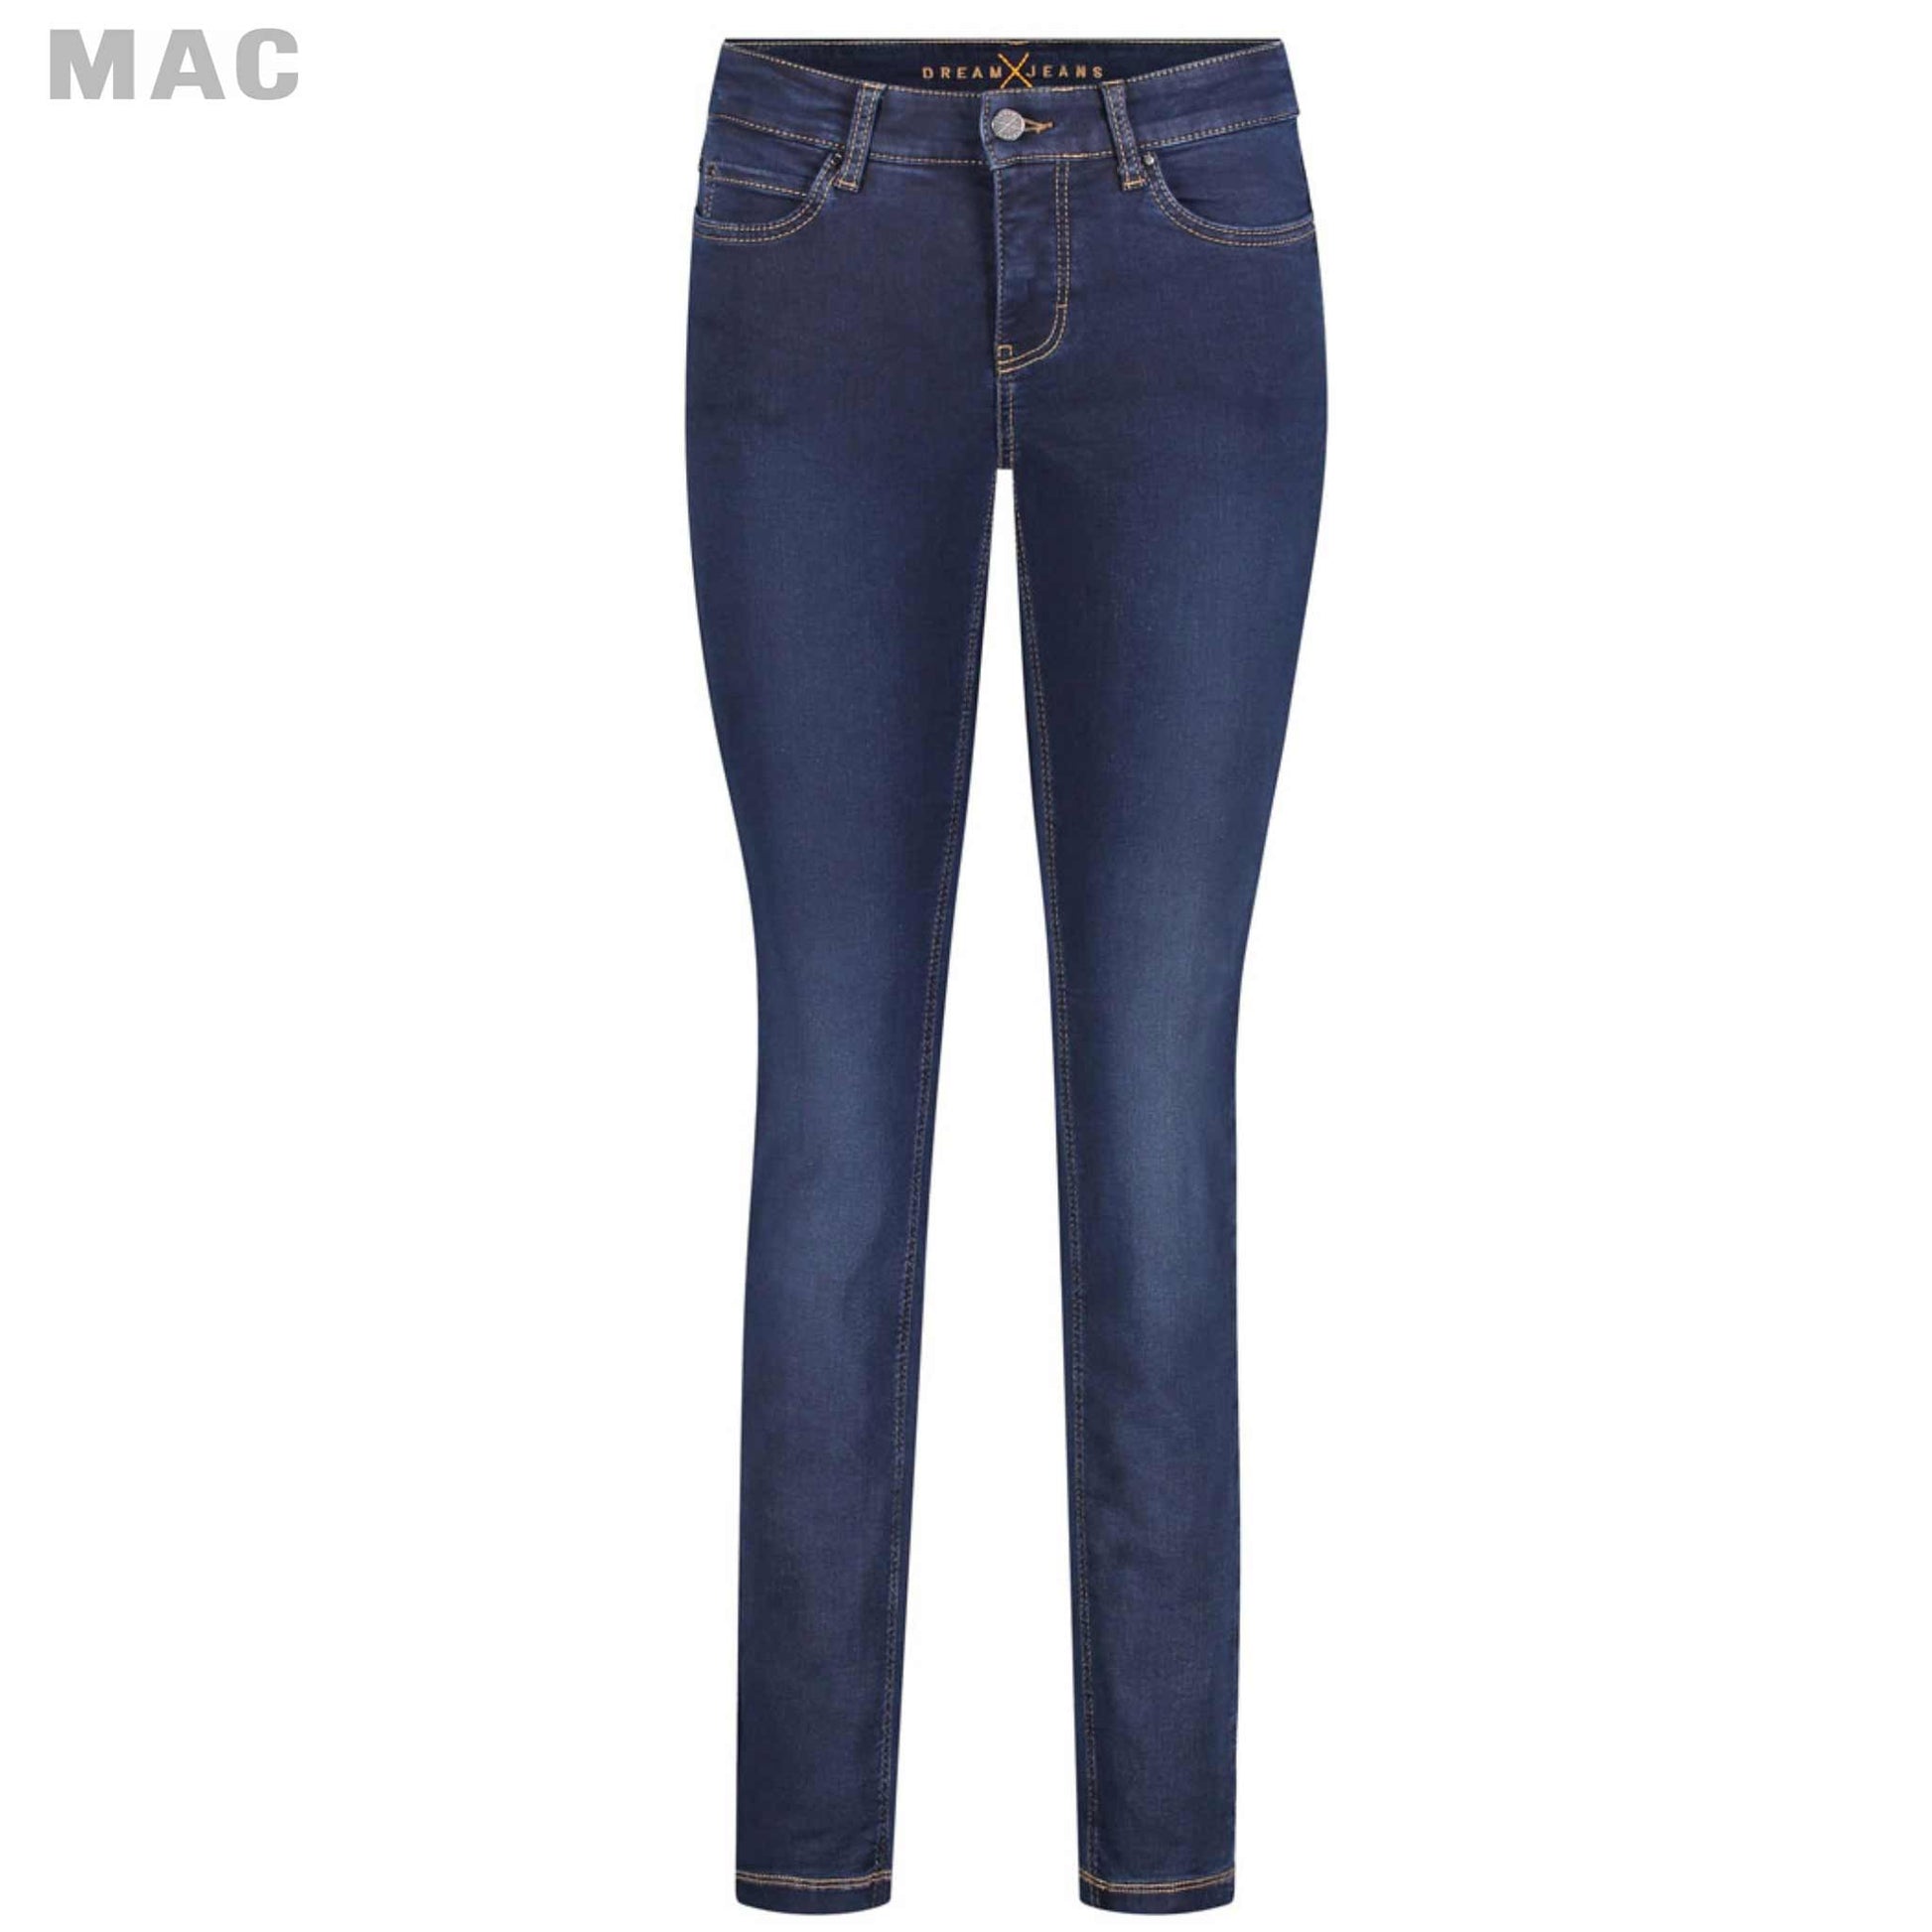 kleding lange vrouwen mac jeans dream skinny dark washed